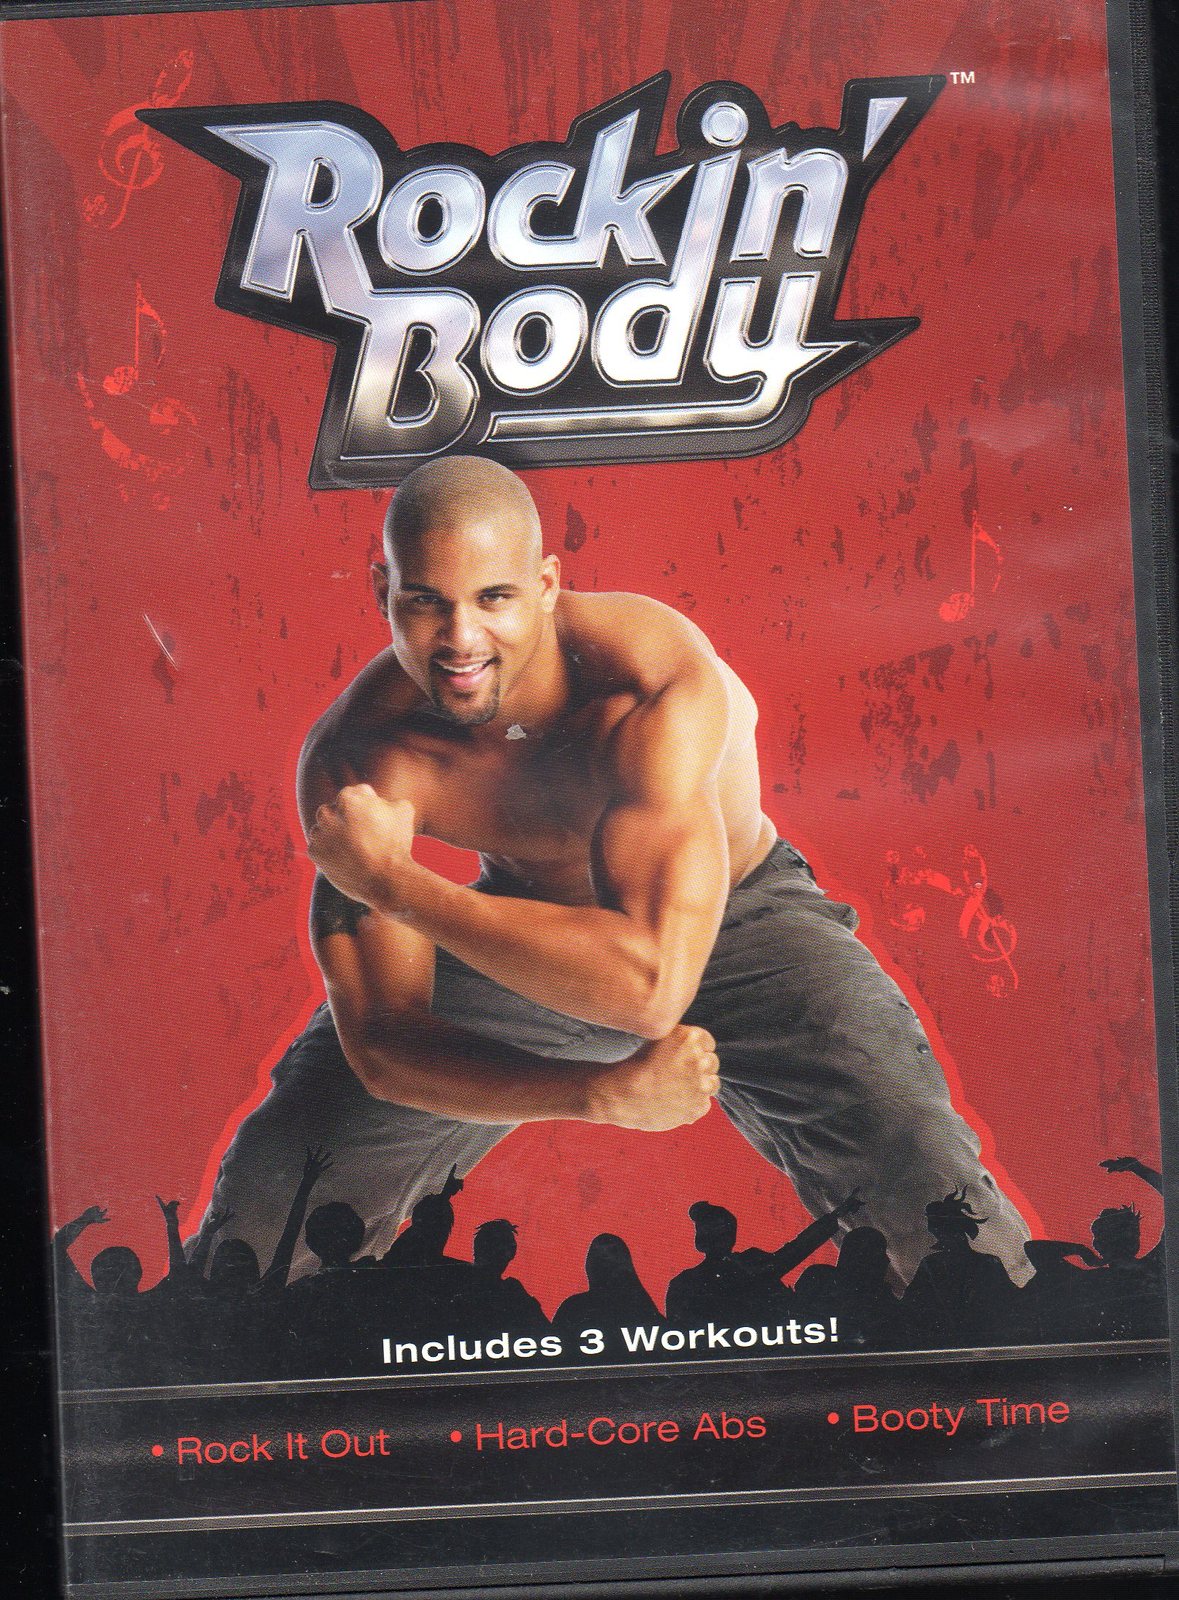   Rocking Body Workouts DVD - $5.95